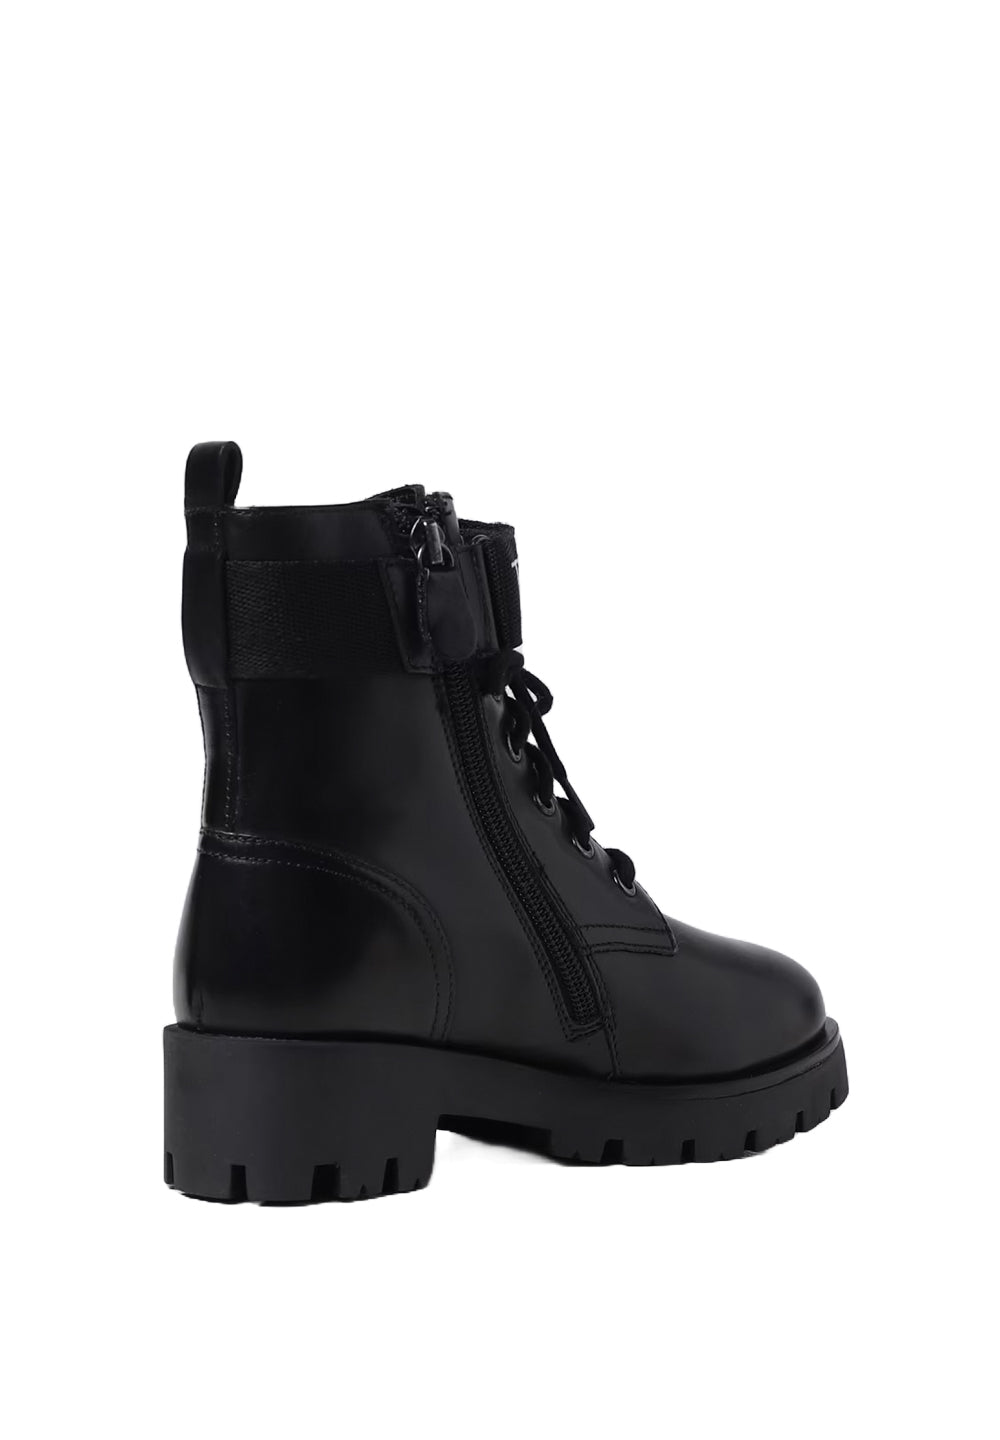 Black amphibious boots for girls